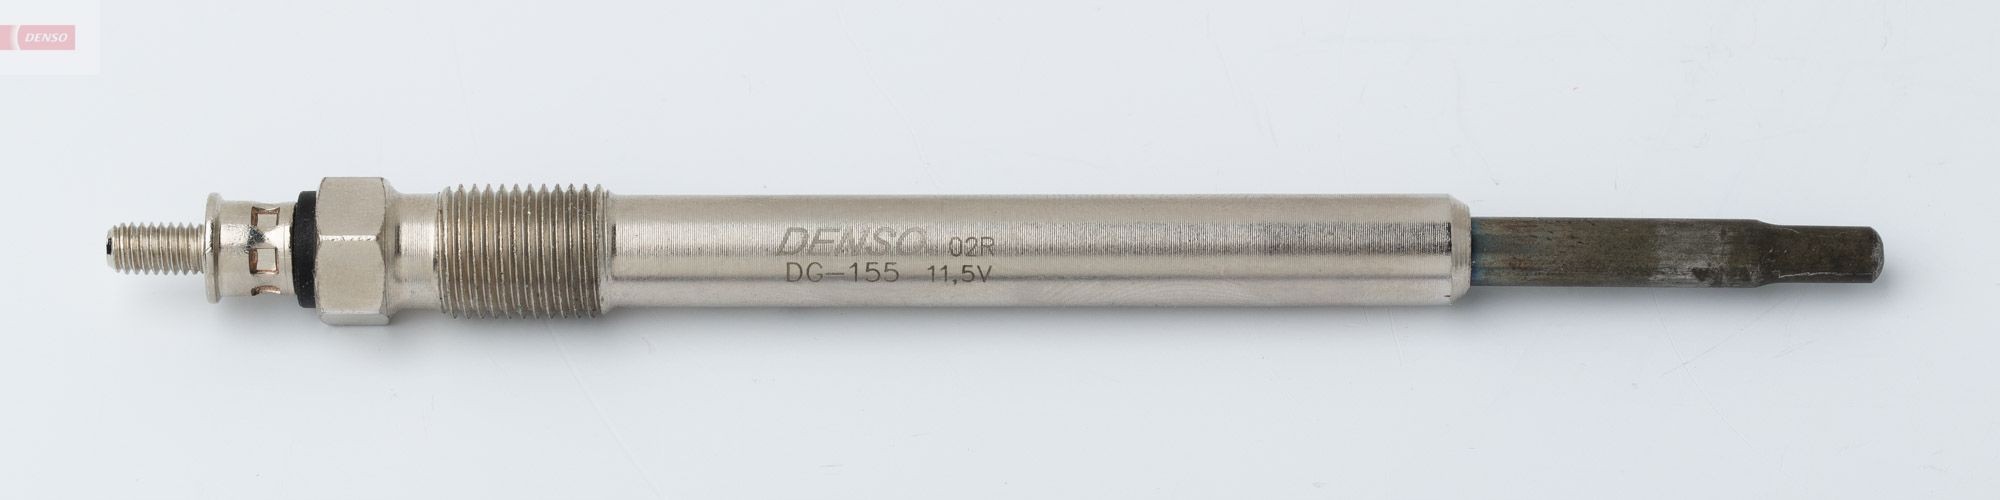 DG-155 DENSO Glow plug MERCEDES-BENZ 11,5V M10x1.0, 128 mm, 10 Nm